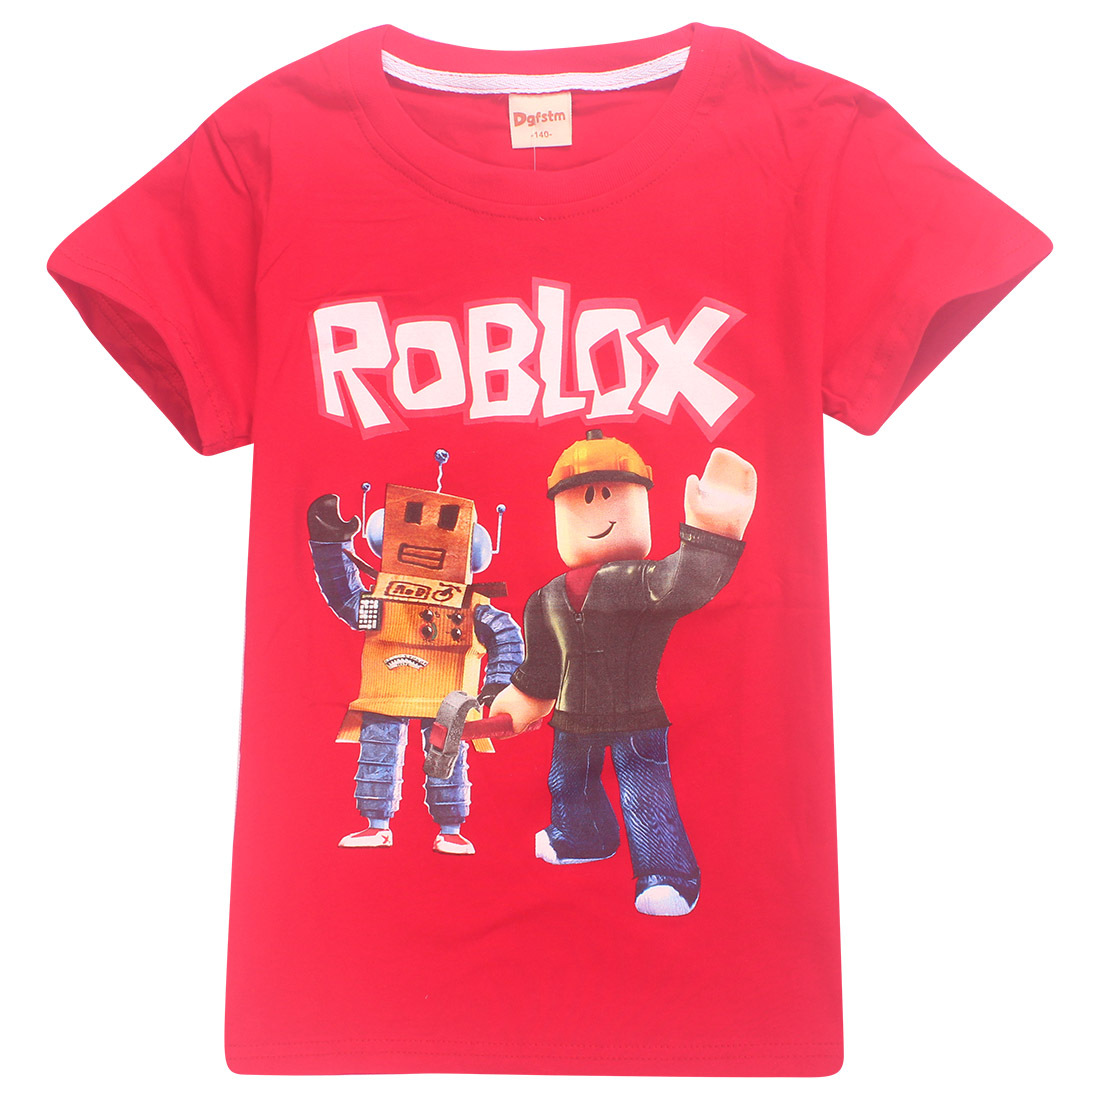 Roblox T Shirts For Kids Eyegemix Com - among us roblox t shirt eye